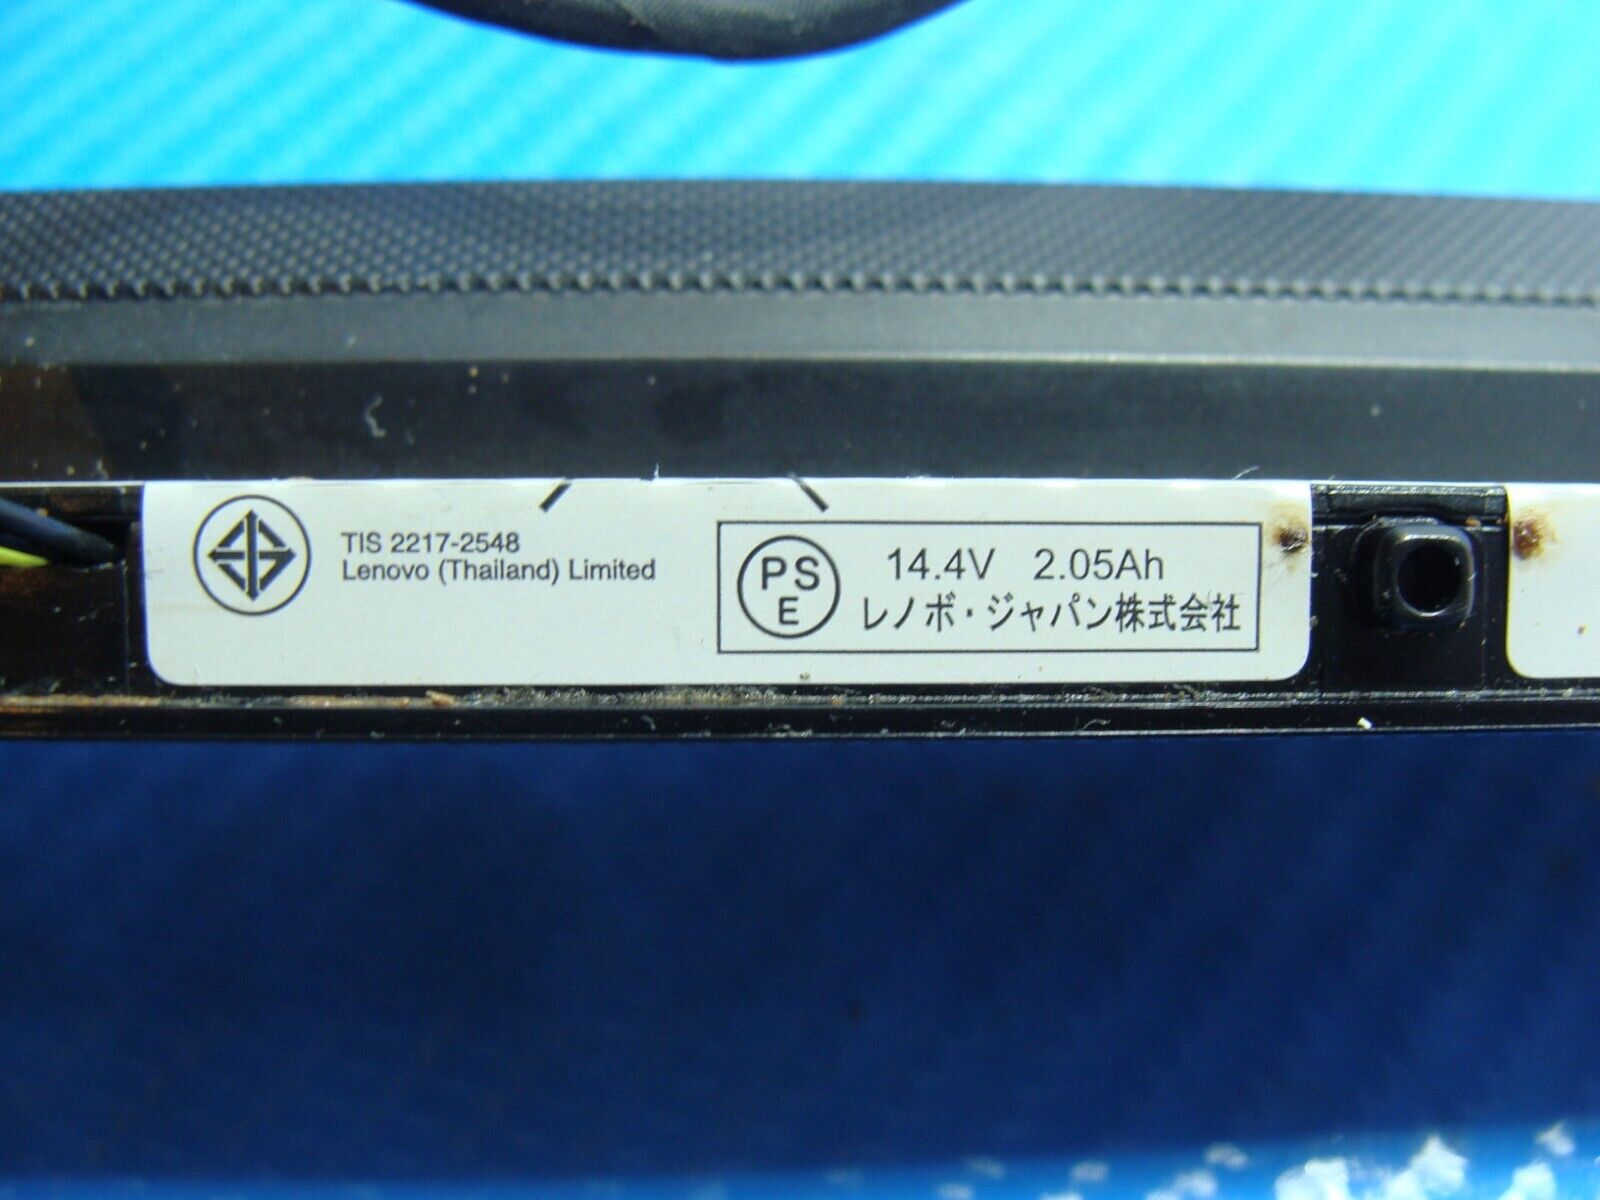 Lenovo IdeaPad 100-15IBD 15.6